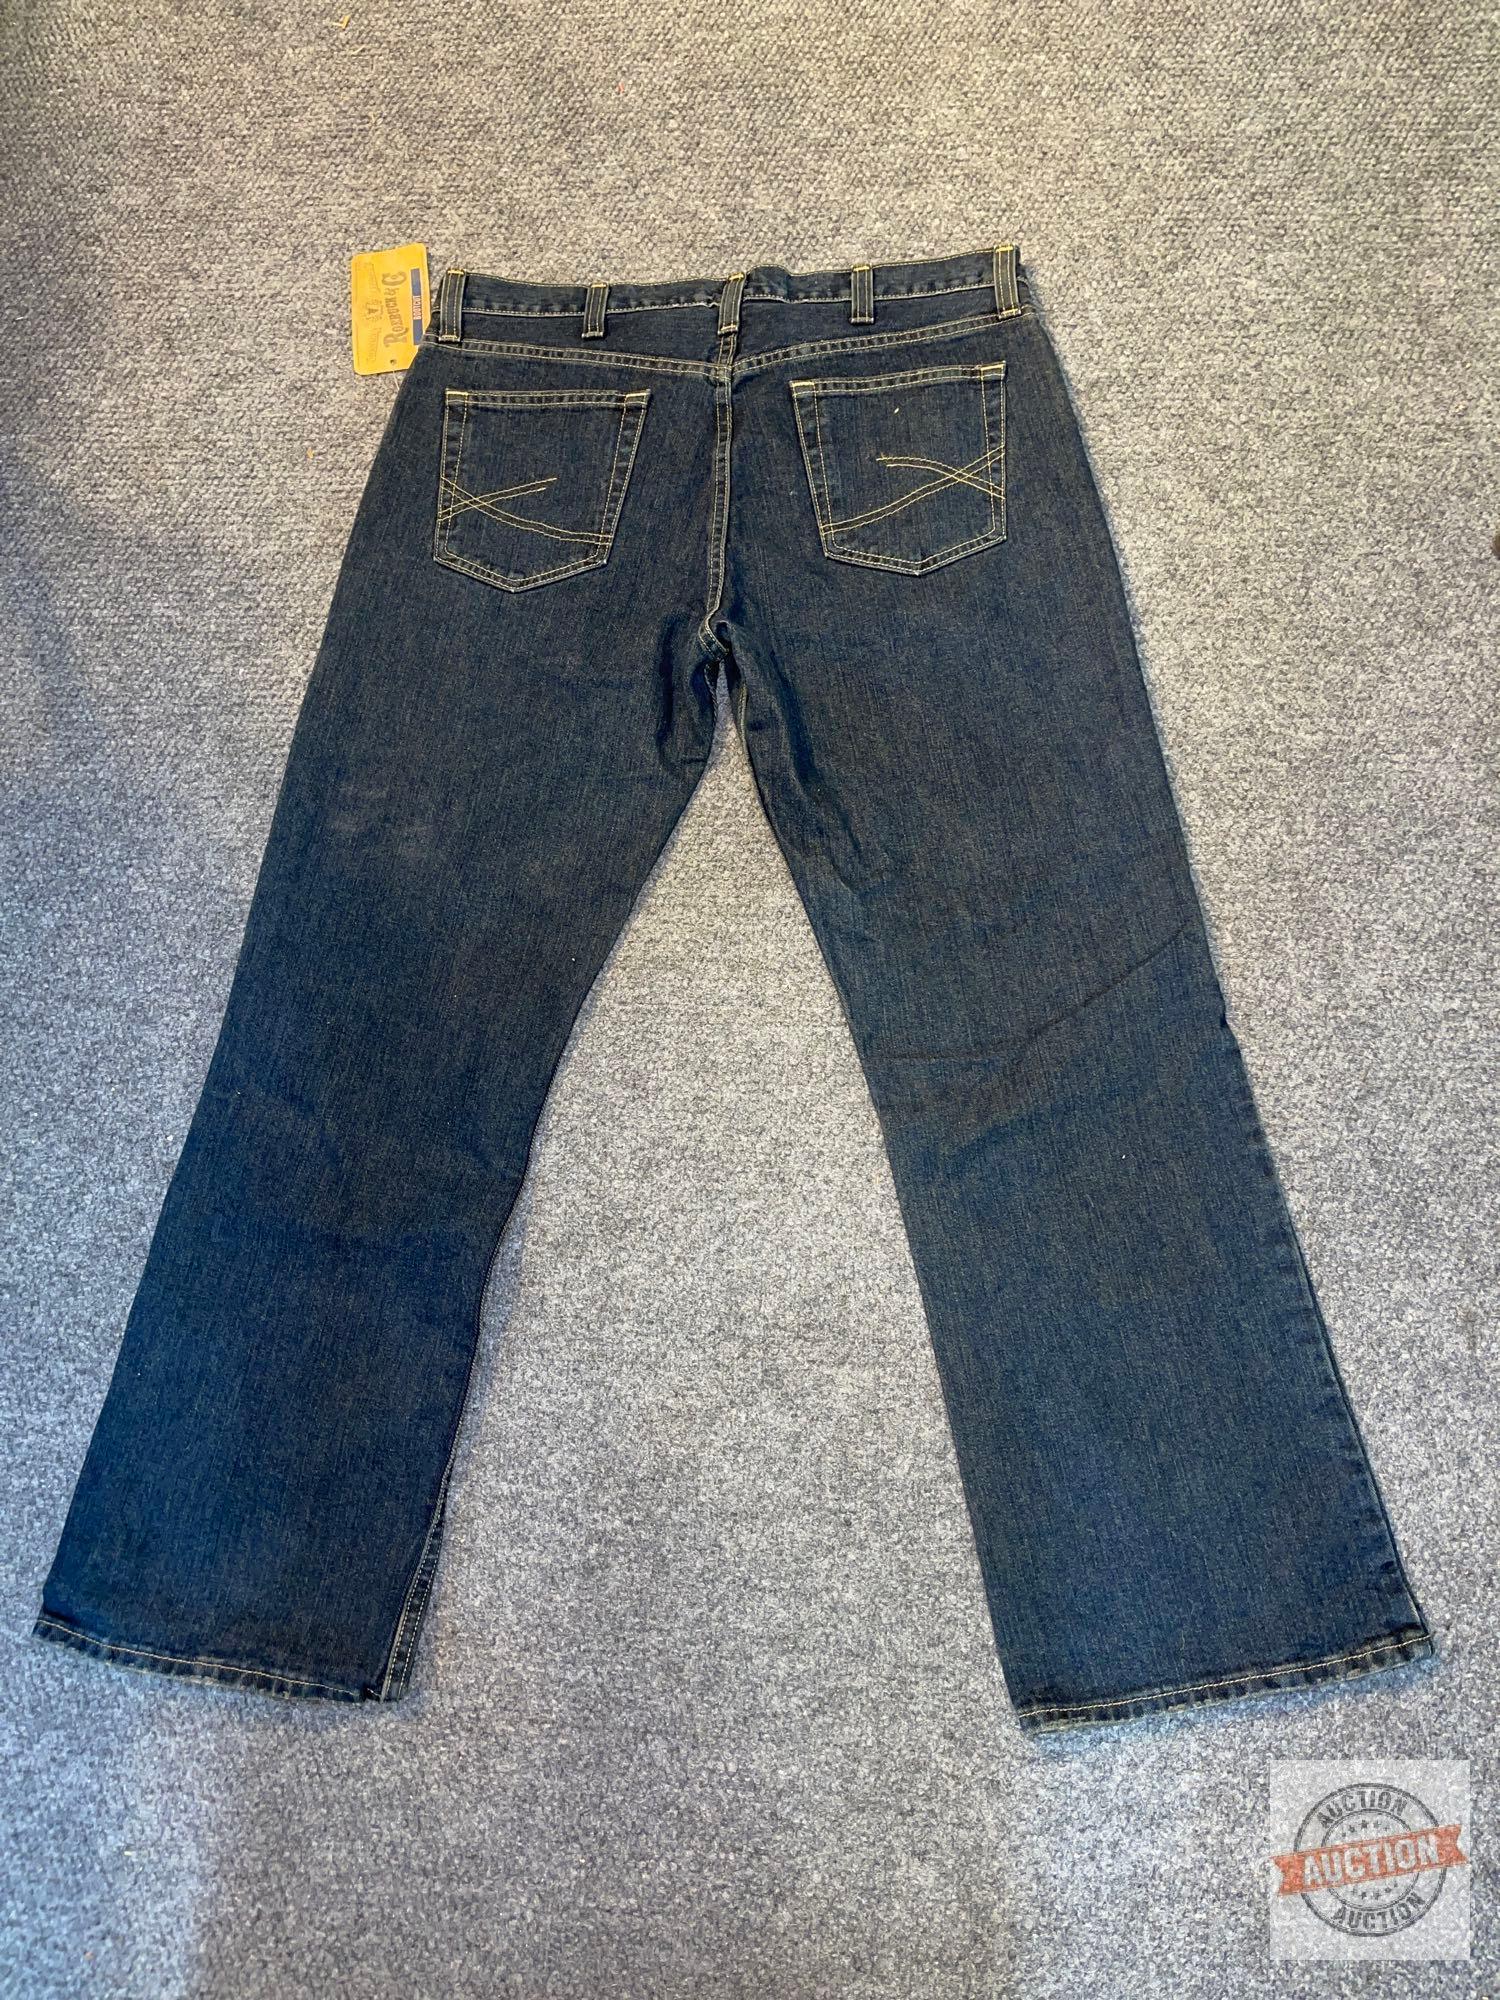 Men's Jeans - Roebuck & Co. Boot cut 36x30 Low rise, straight leg w/ tags